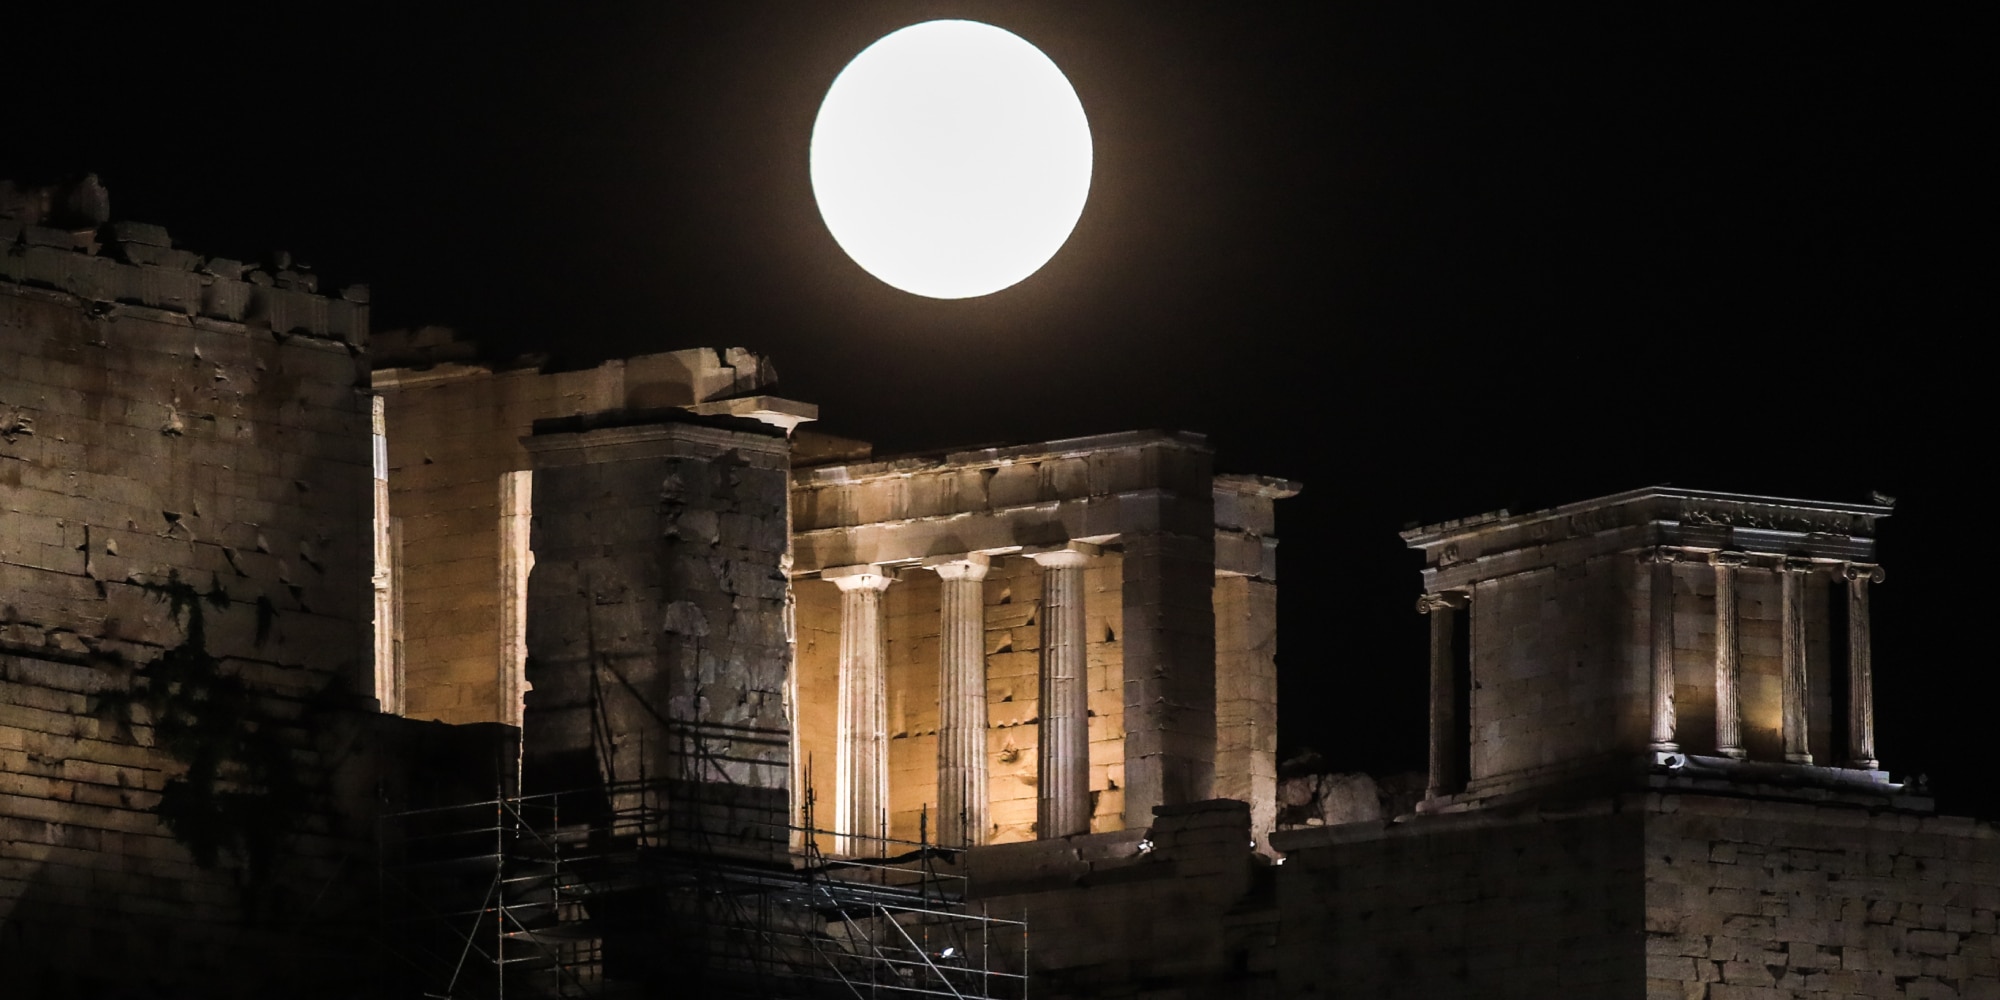 akropoli yperpanselinos - Πέντε συγκλονιστικά κλικ από την υπερπανσέληνο του Αυγούστου: Από την Ακρόπολη μέχρι το Σούνιο, μάγεψε το «φεγγάρι του οξύρρυγχου»